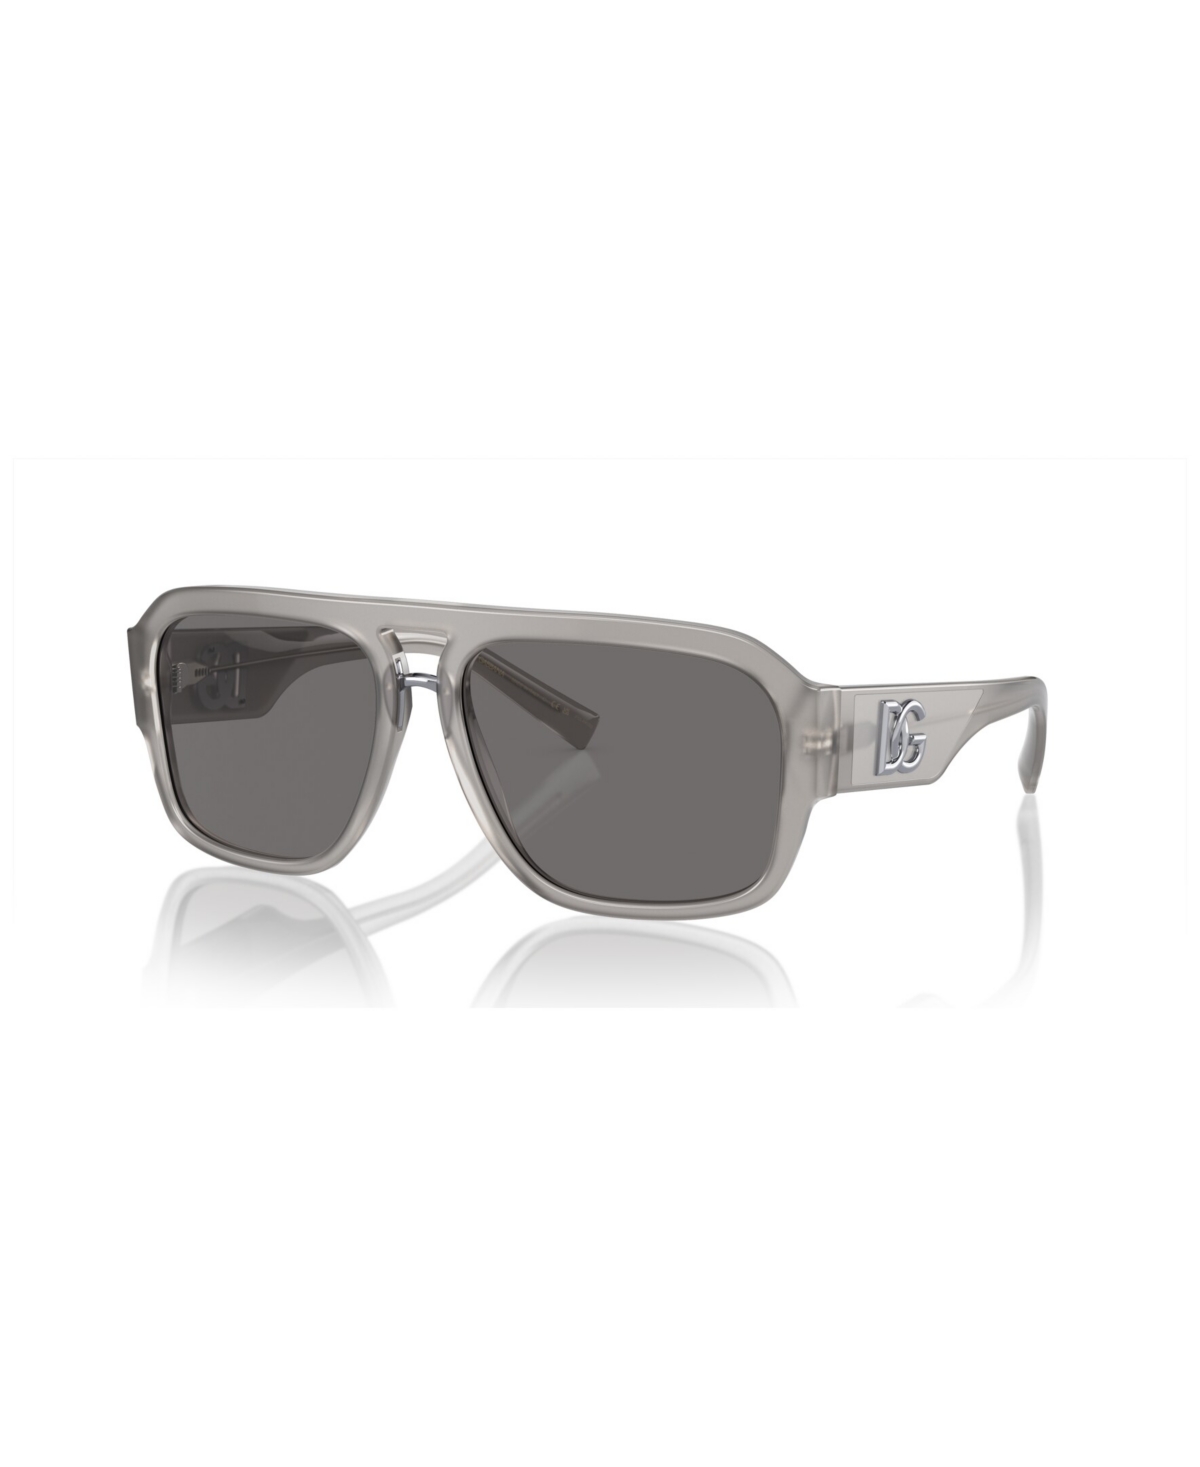 Dolce & Gabbana Men's Polarized Sunglasses, Dg4403 In Gray/gray Polarized Solid